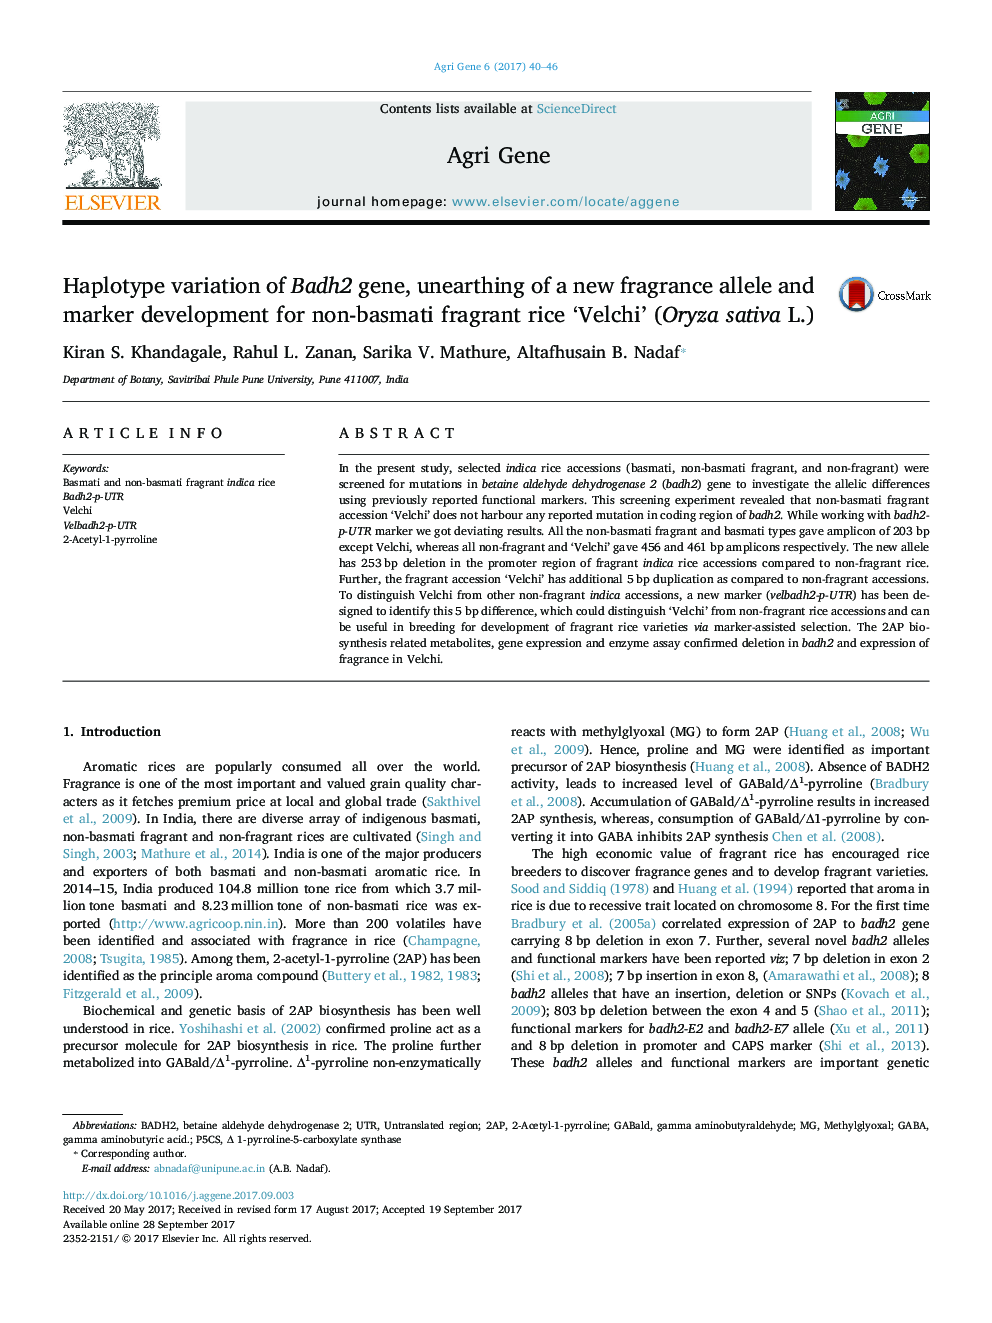 Haplotype variation of Badh2 gene, unearthing of a new fragrance allele and marker development for non-basmati fragrant rice 'Velchi' (Oryza sativa L.)